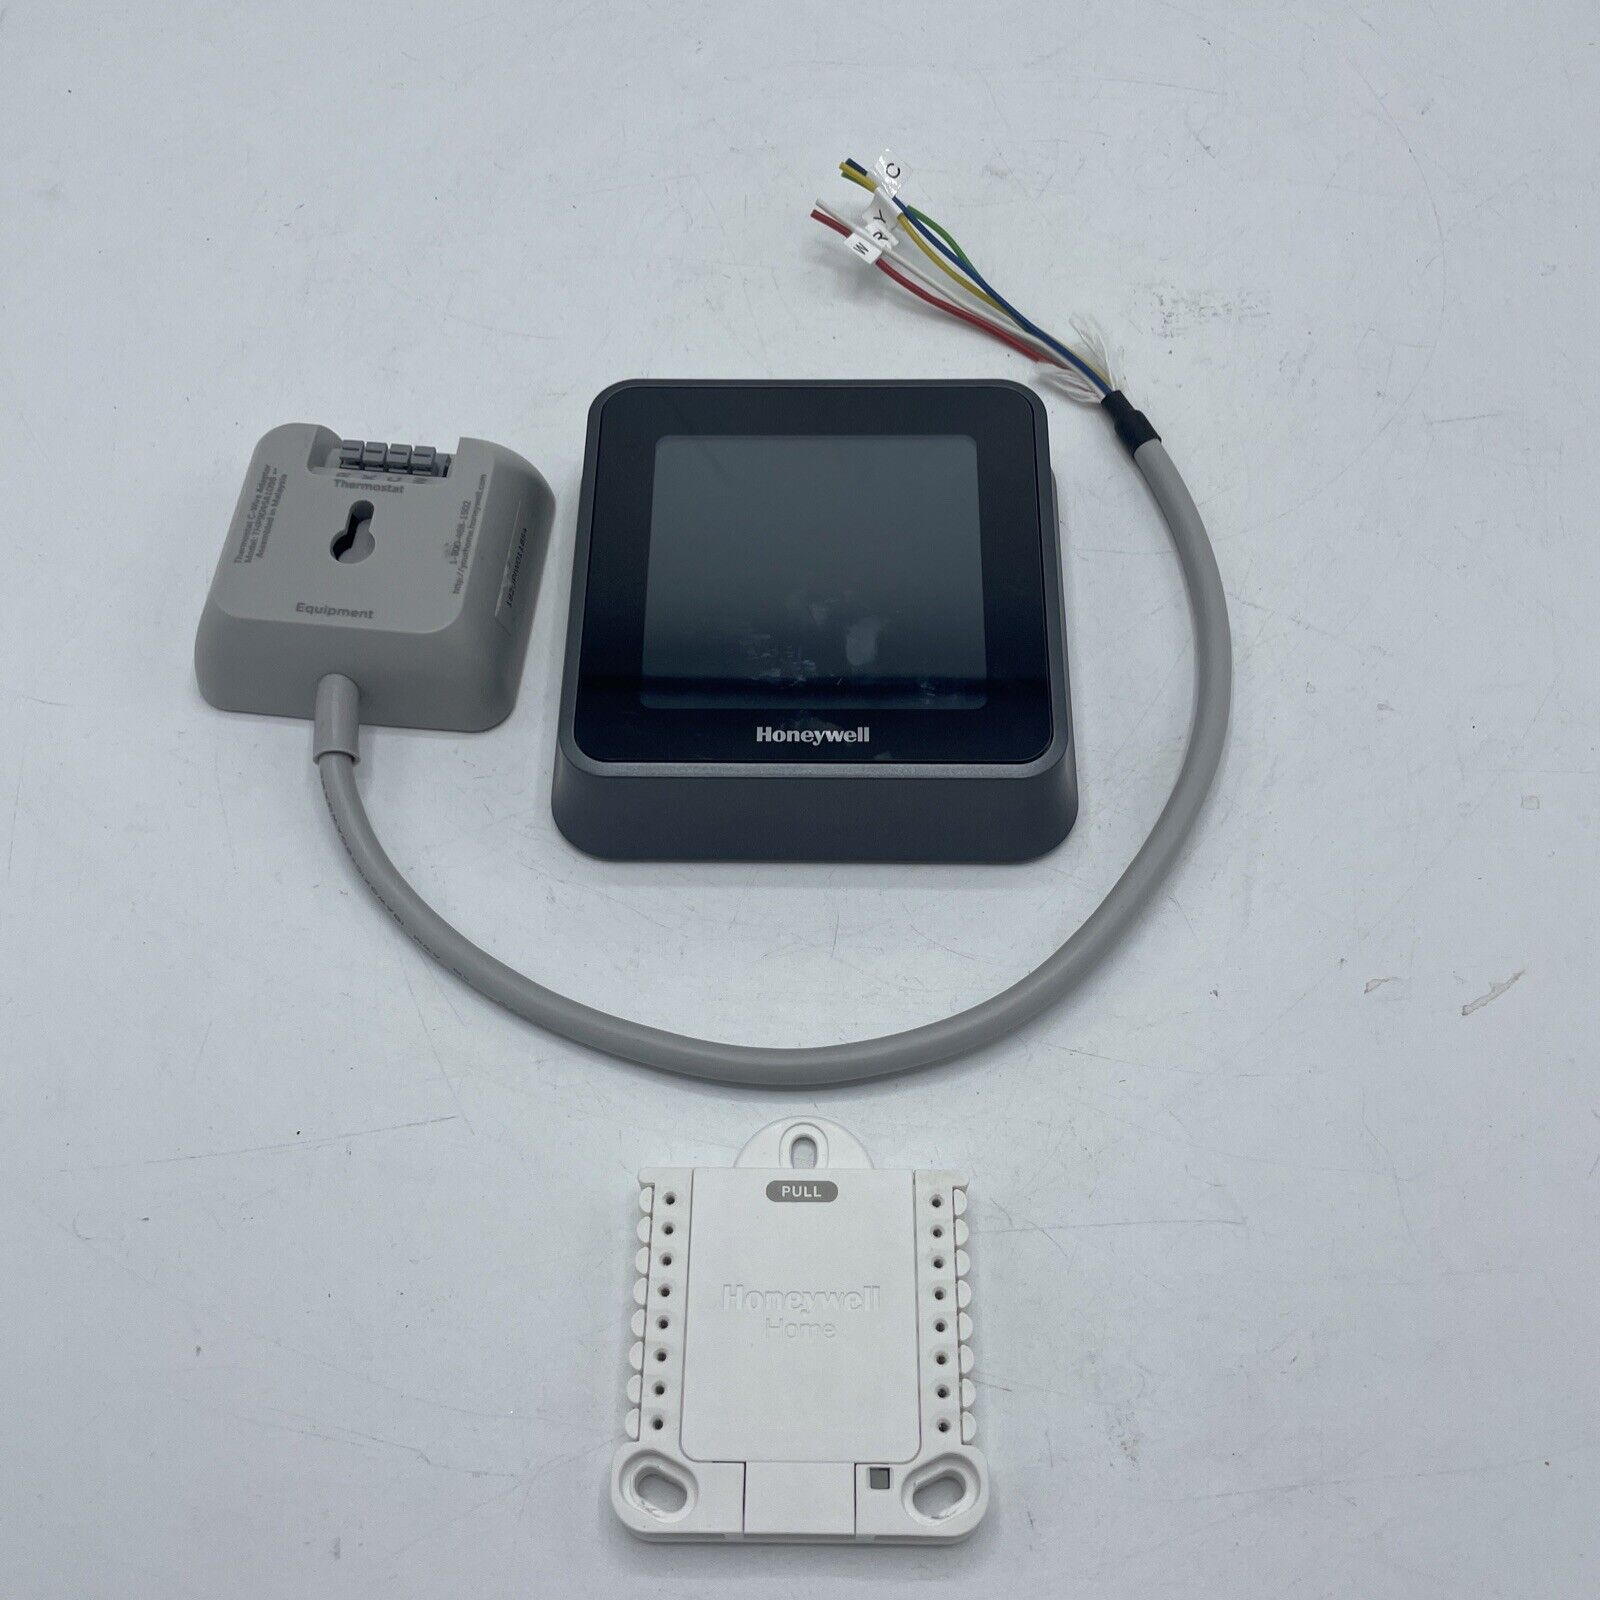 Honeywell T5+ Plus Wi-Fi Smart Thermostat RCHT8612WF2005 (No box), view photos 